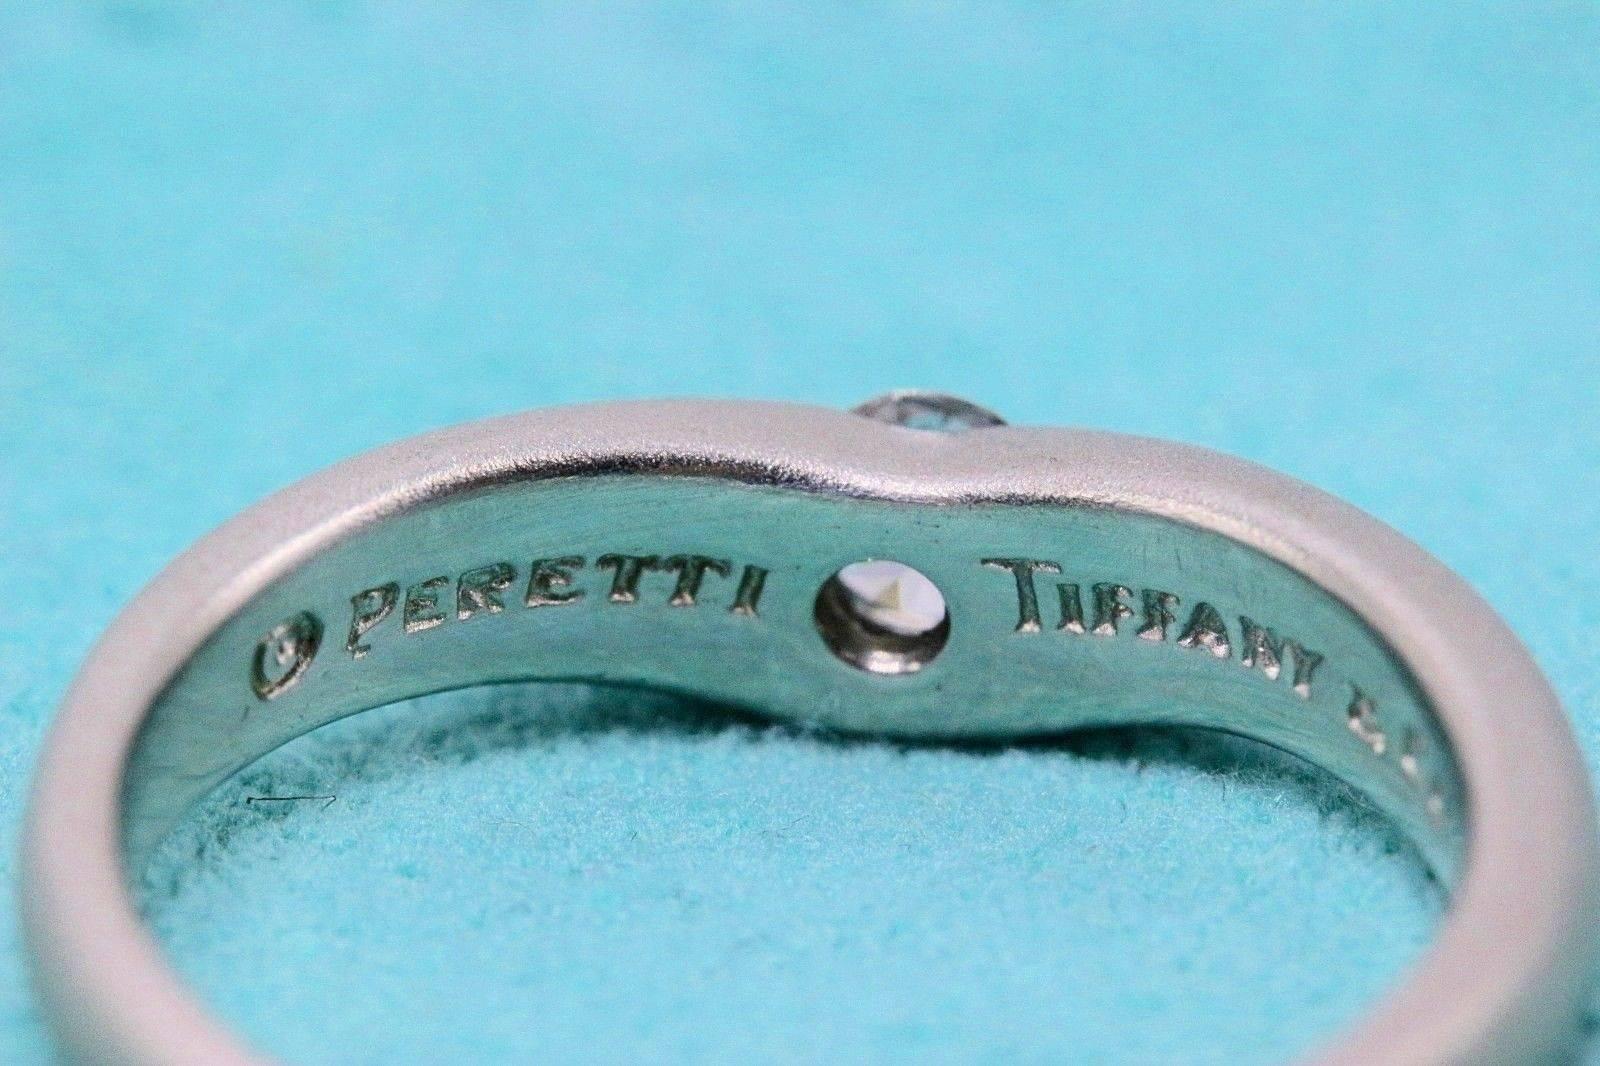 Tiffany & Co.
Style:  Elsa Peretti Curve Band Ring
Sku Number:  12060424
Metal:  Platinum PT950
Size:  8 - sizable
Total Carat Weight:  0.18 CTS
Diamond Shape:  Round Brilliant
Diamond Color & Clarity:  F / VS
Hallmark:  PERETTI